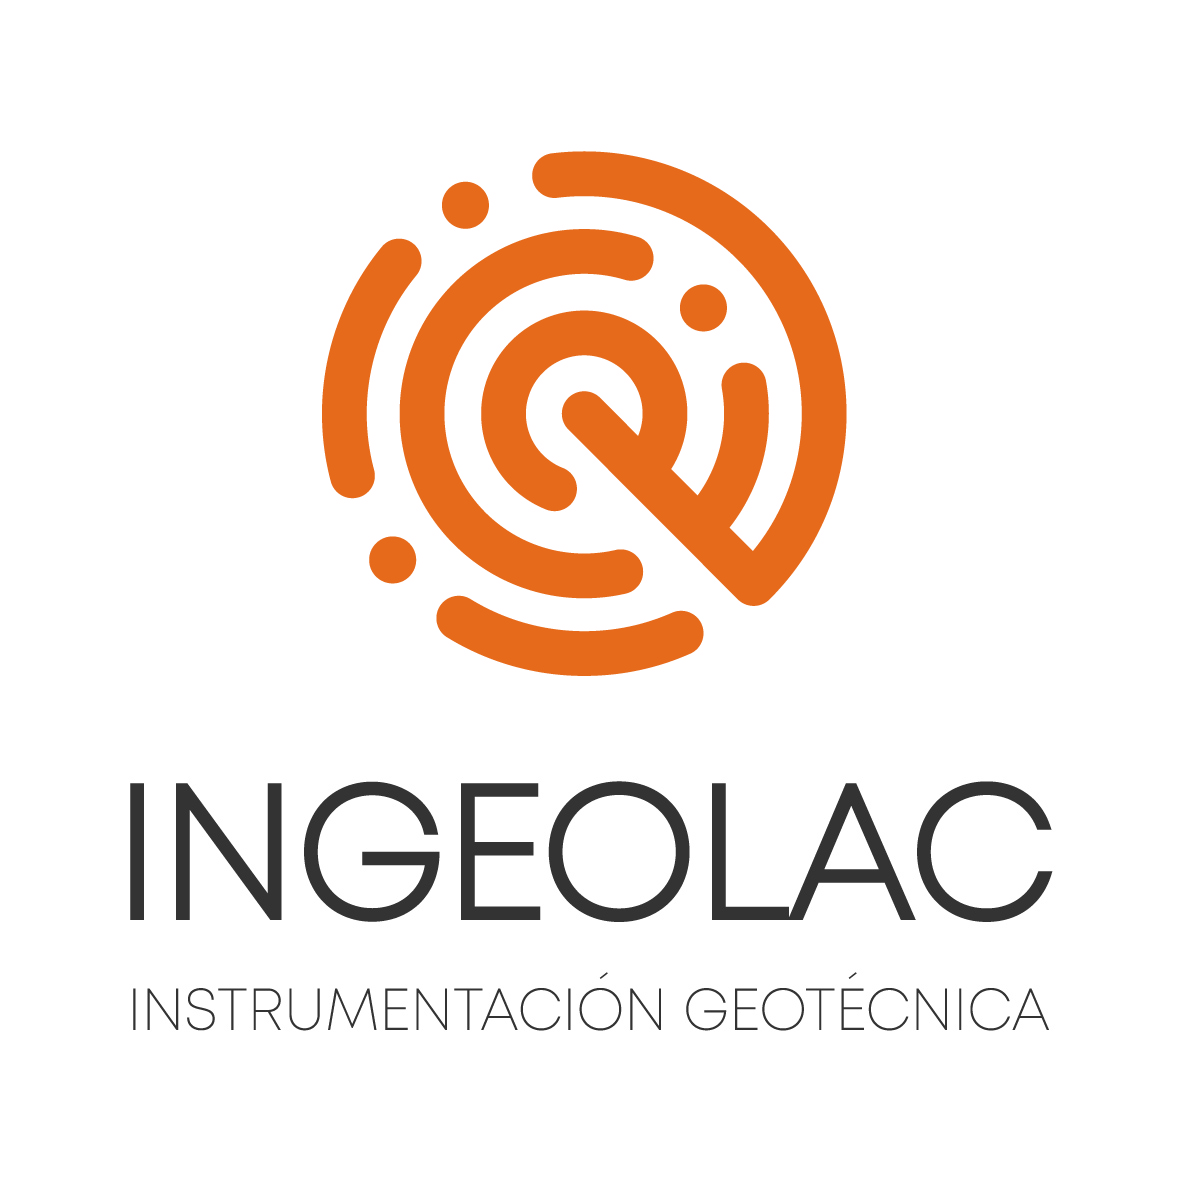 ingeolac-instrumentacion-geotecnica